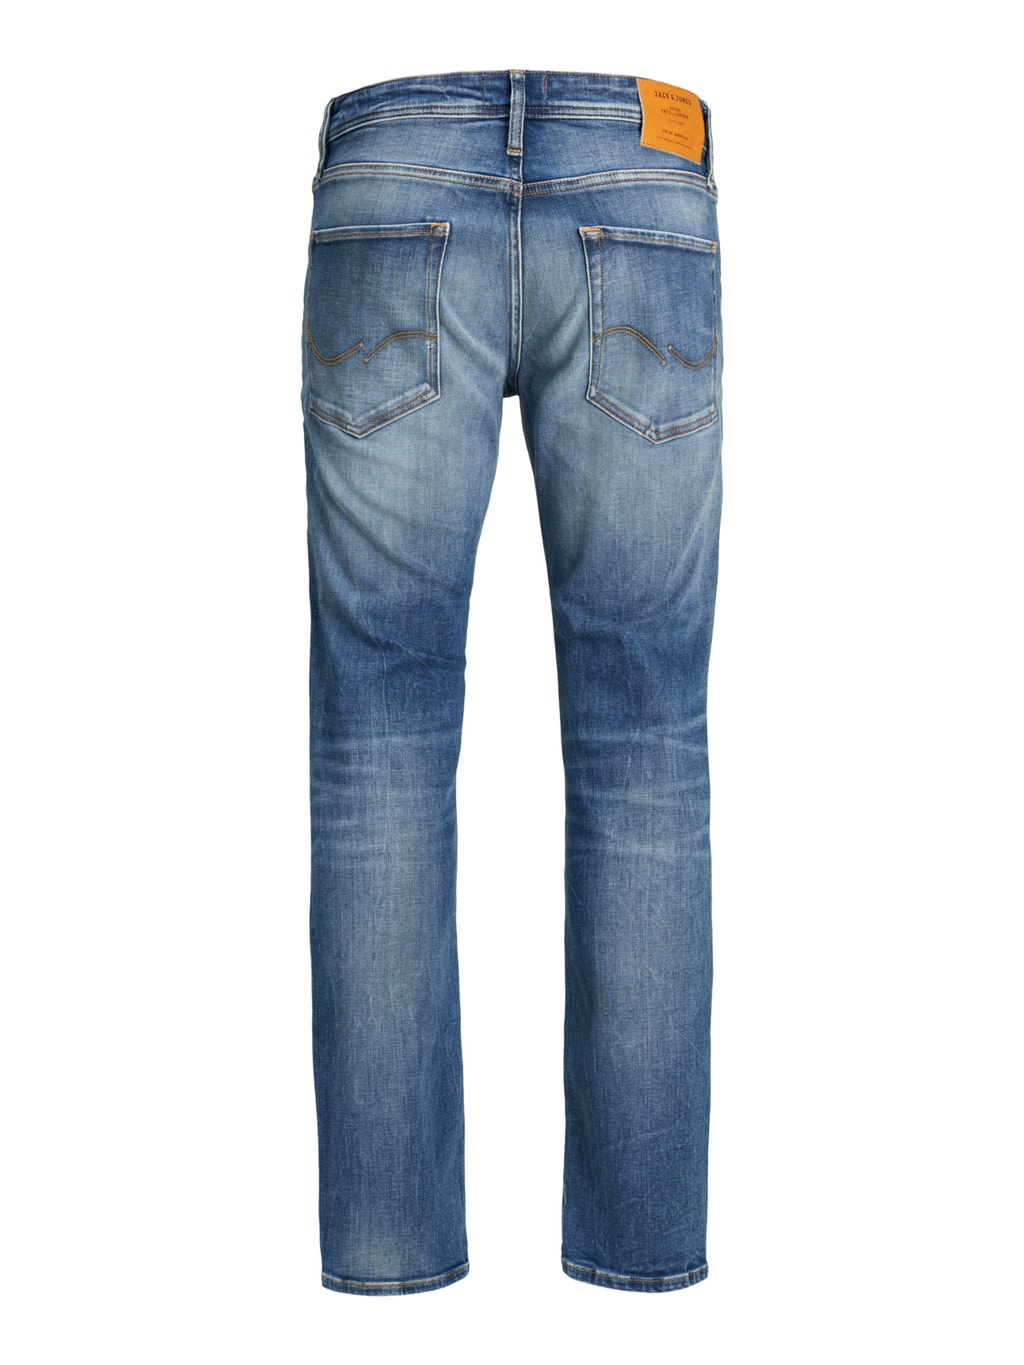 Mike Original JOS 411 Comfort fit jeans | Medium Blue | Jack & Jones®